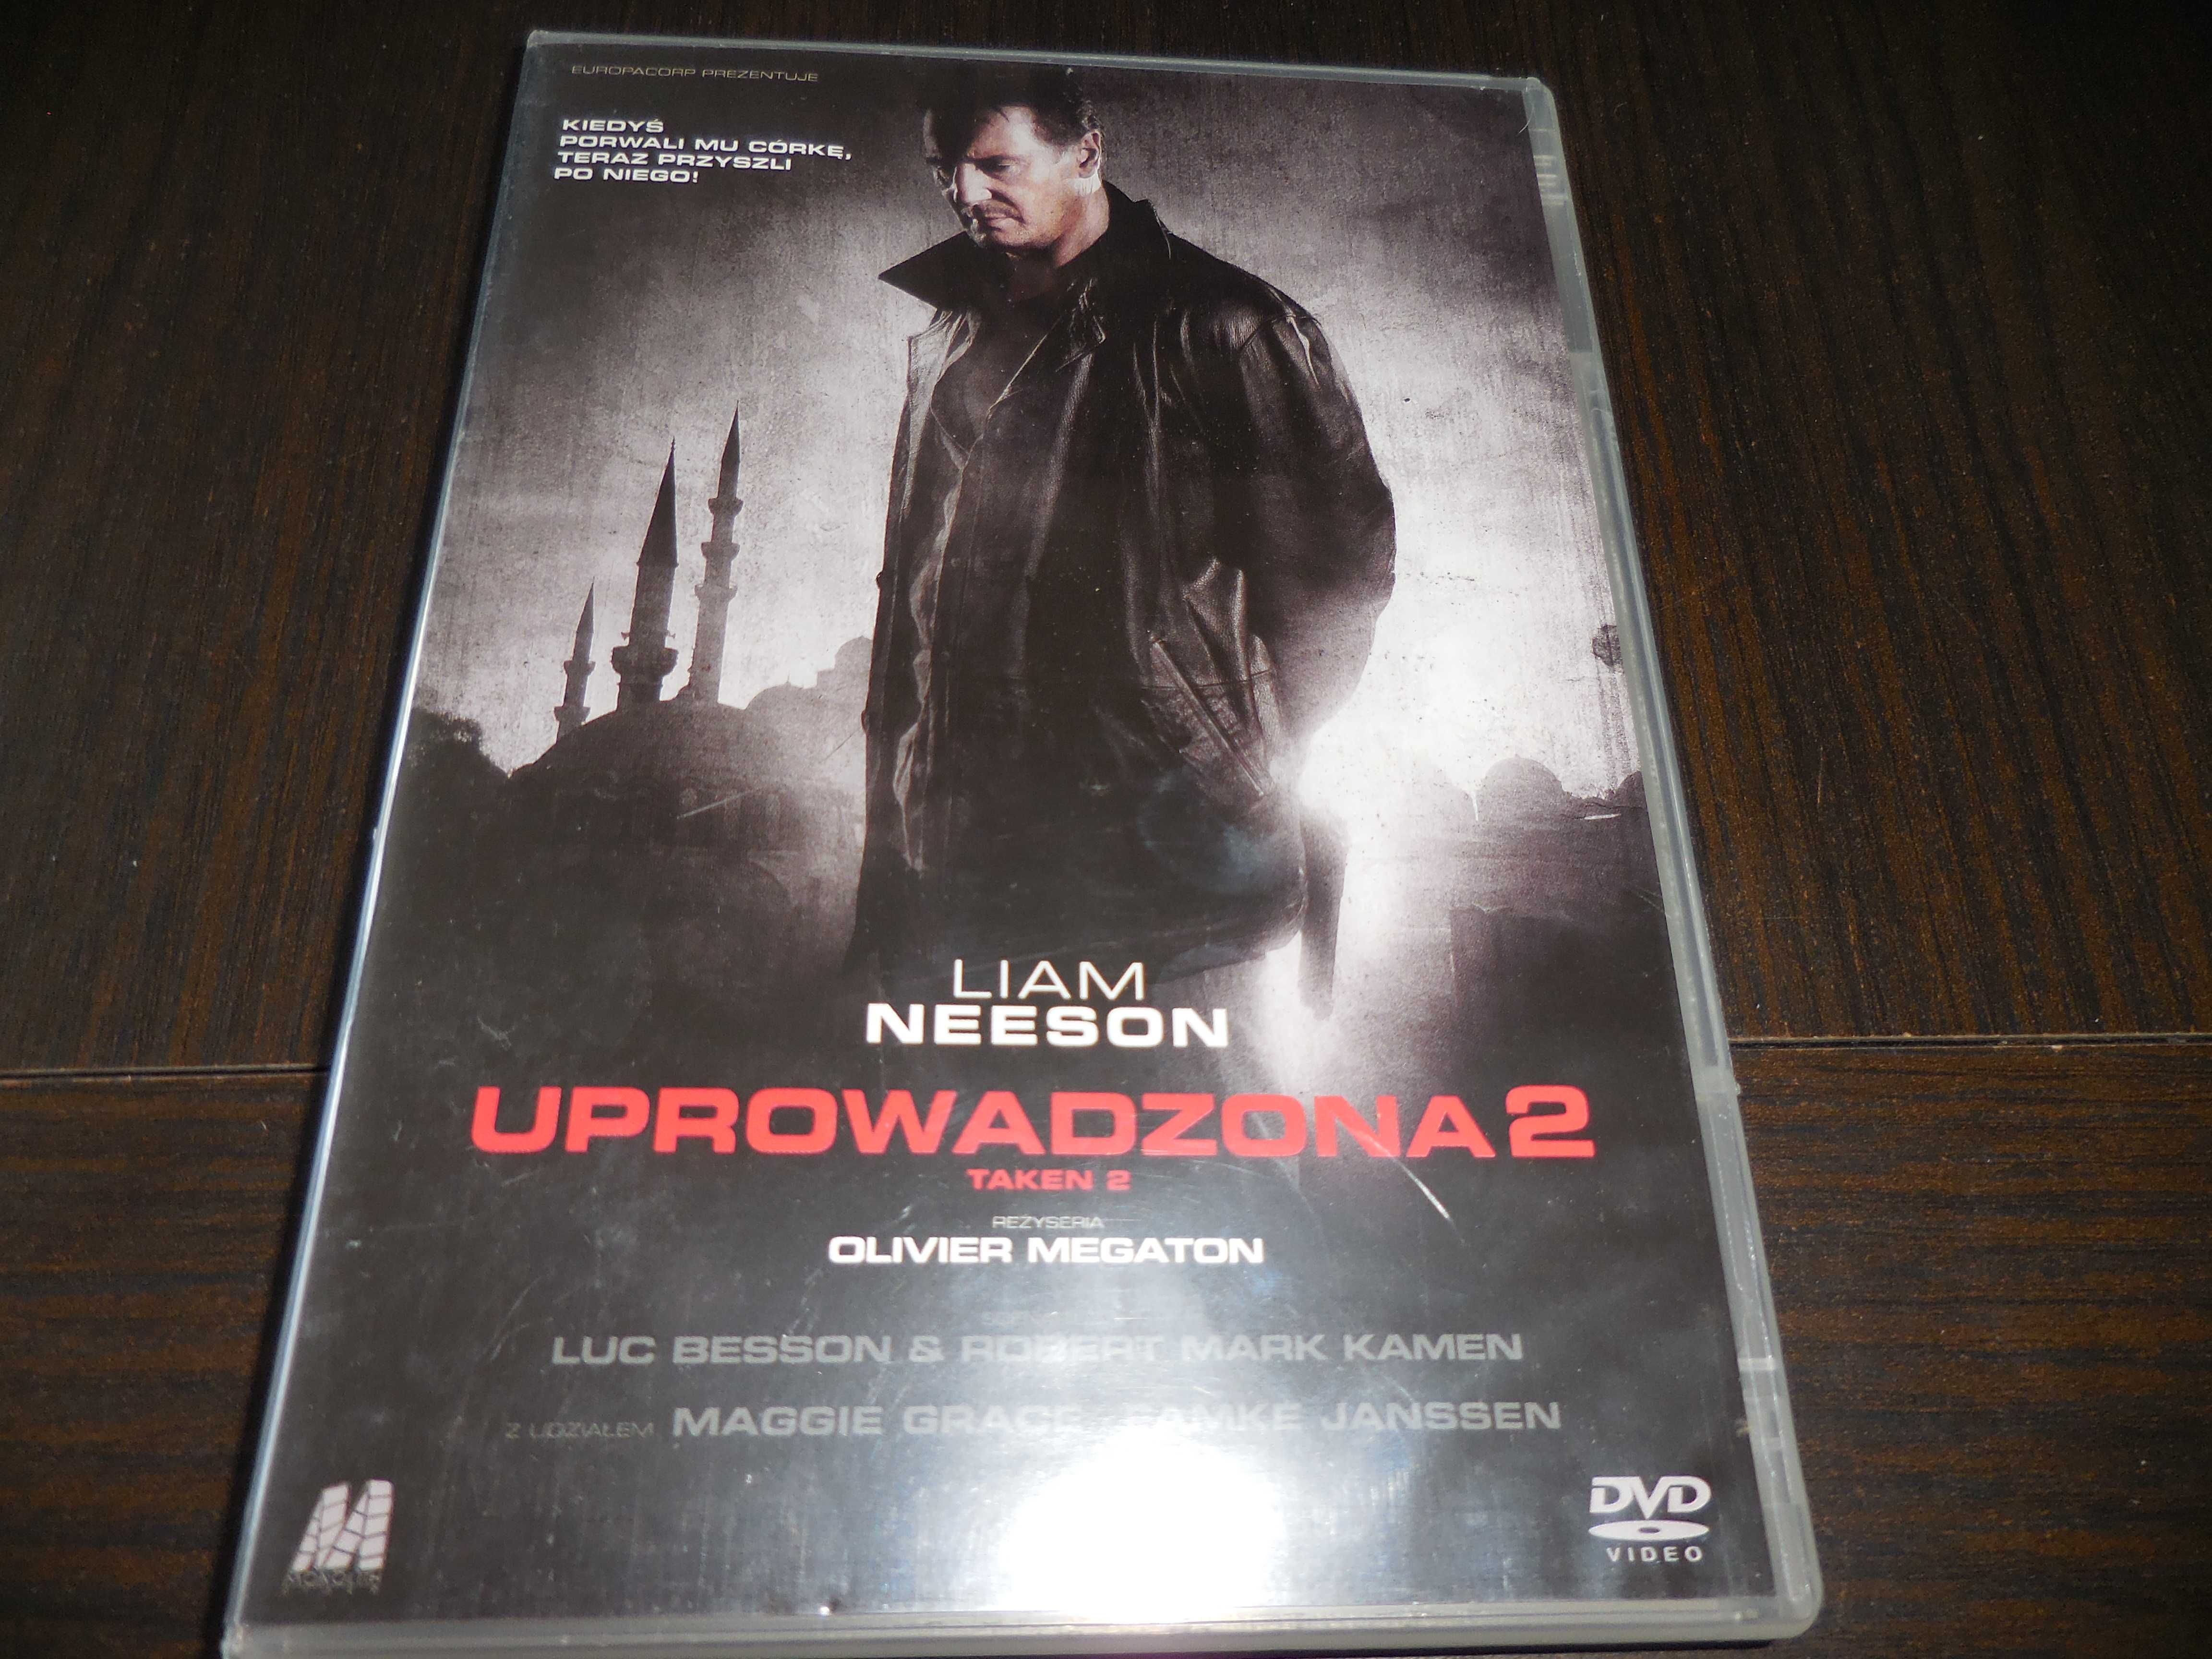 UPROWADZONA 2 - Liam Neeson